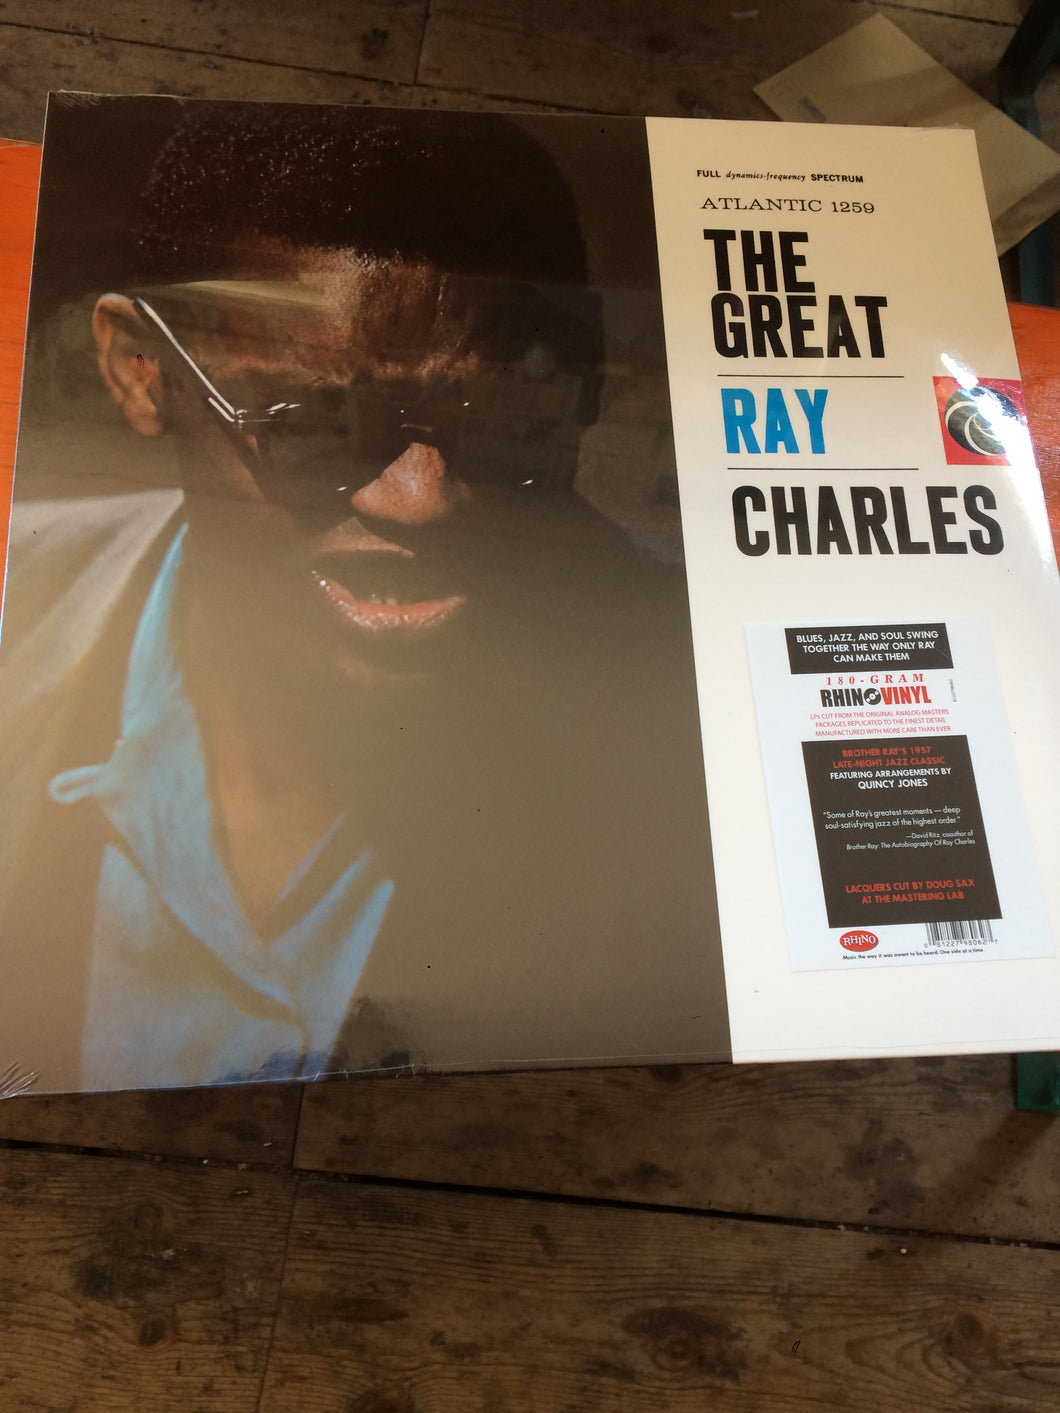 Ray Charles - The Great Ray Charles